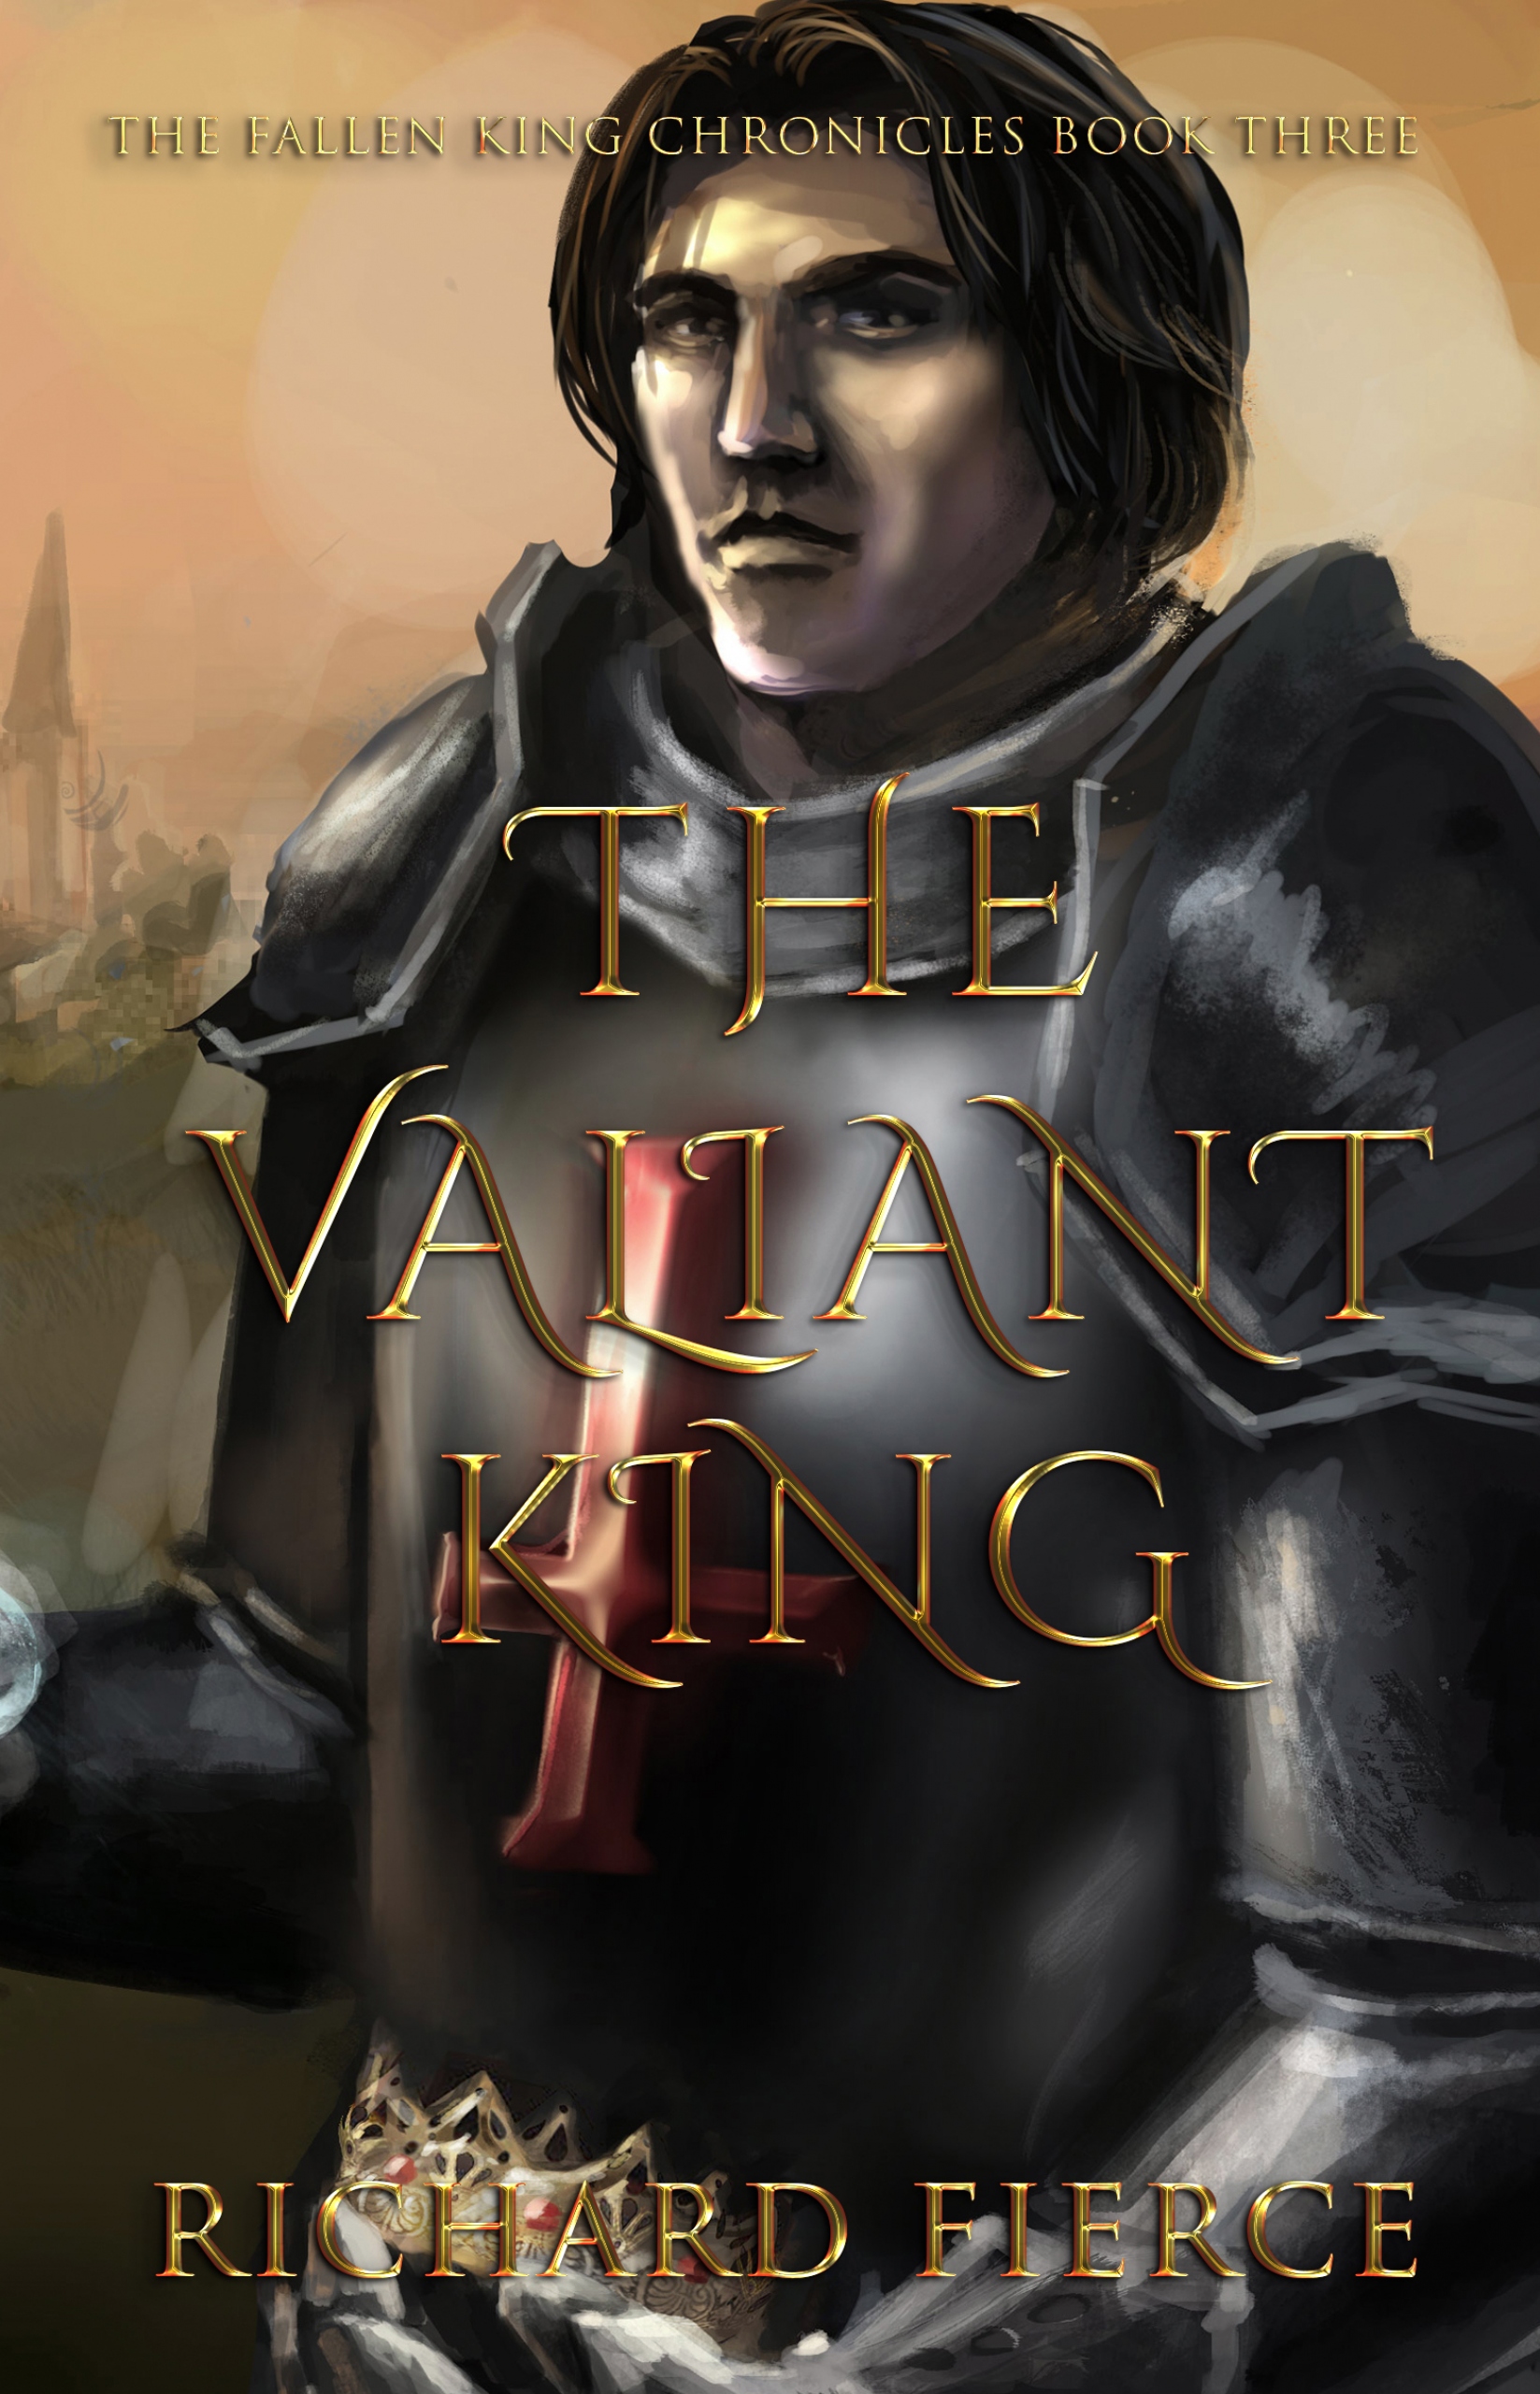 The Valiant King